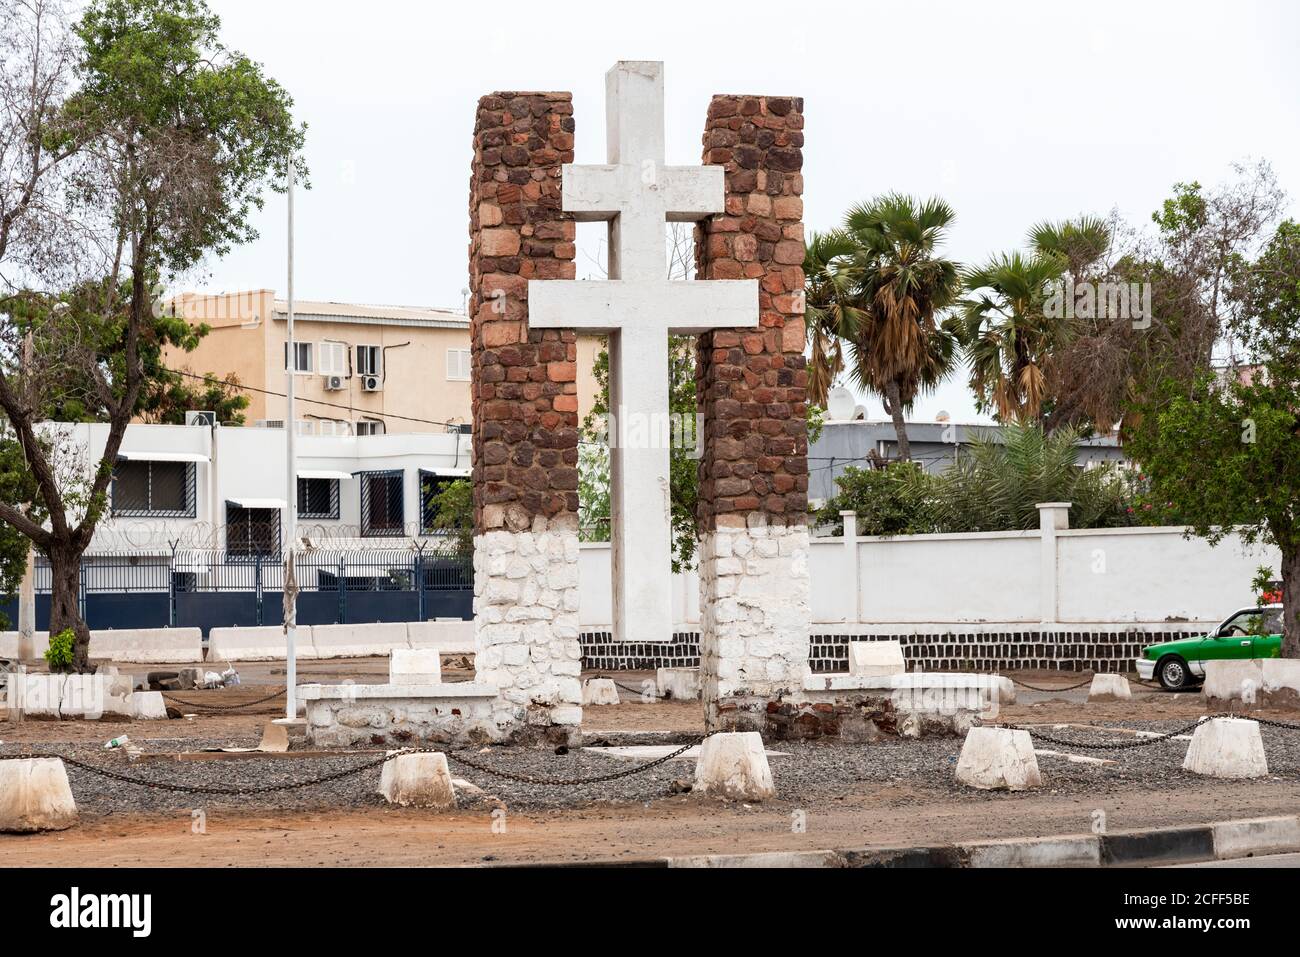 Croix de Lorraine (Cross of Lorraine), Djibouti, East Africa Stock Photo